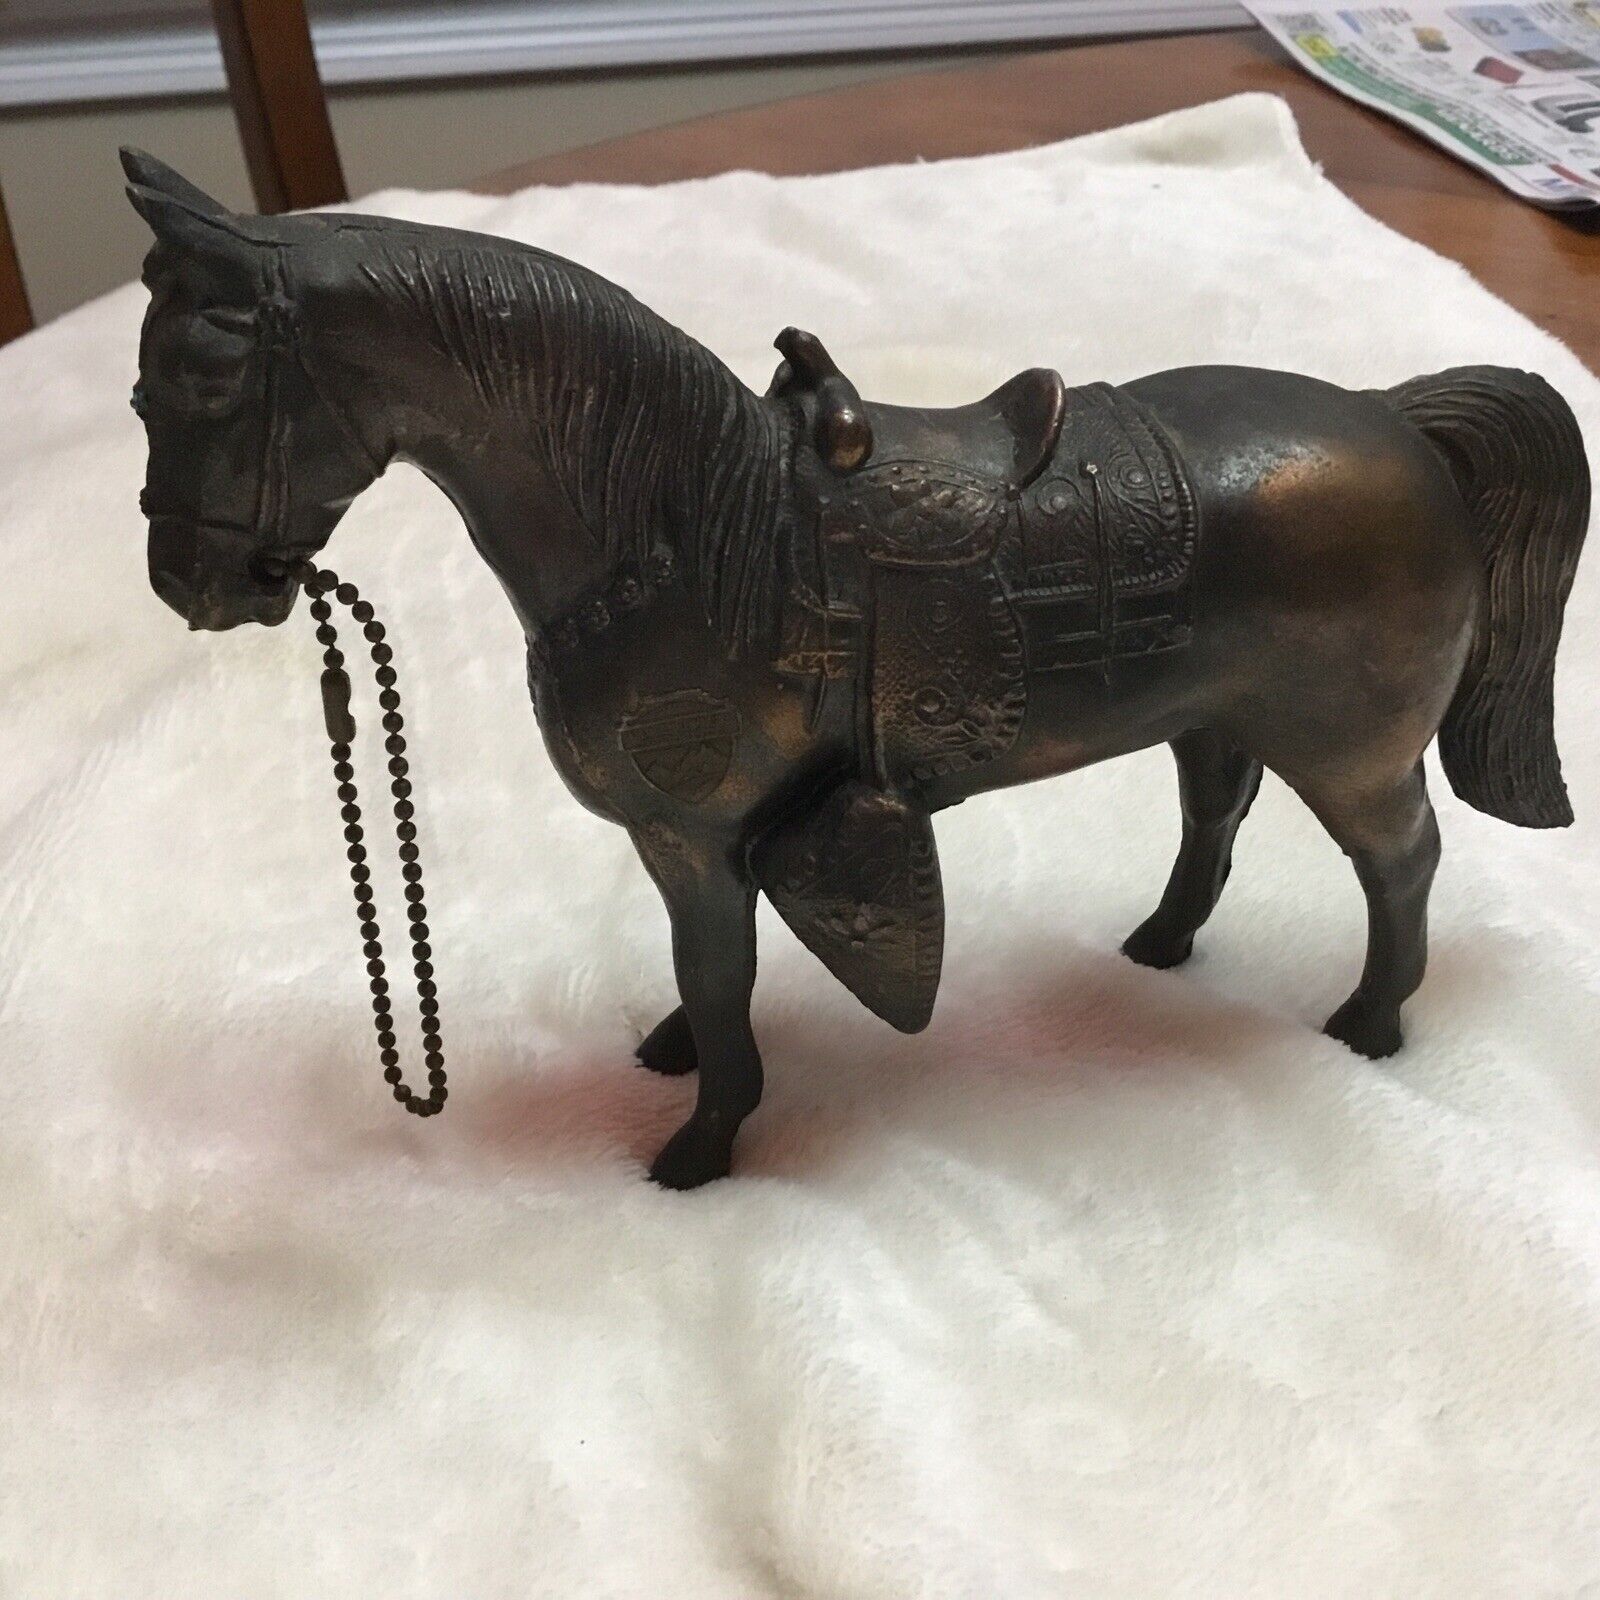 Vintage ornate bronze copper colored HORSE FIGURINE - 7-1/2” long / 5-1/2” high